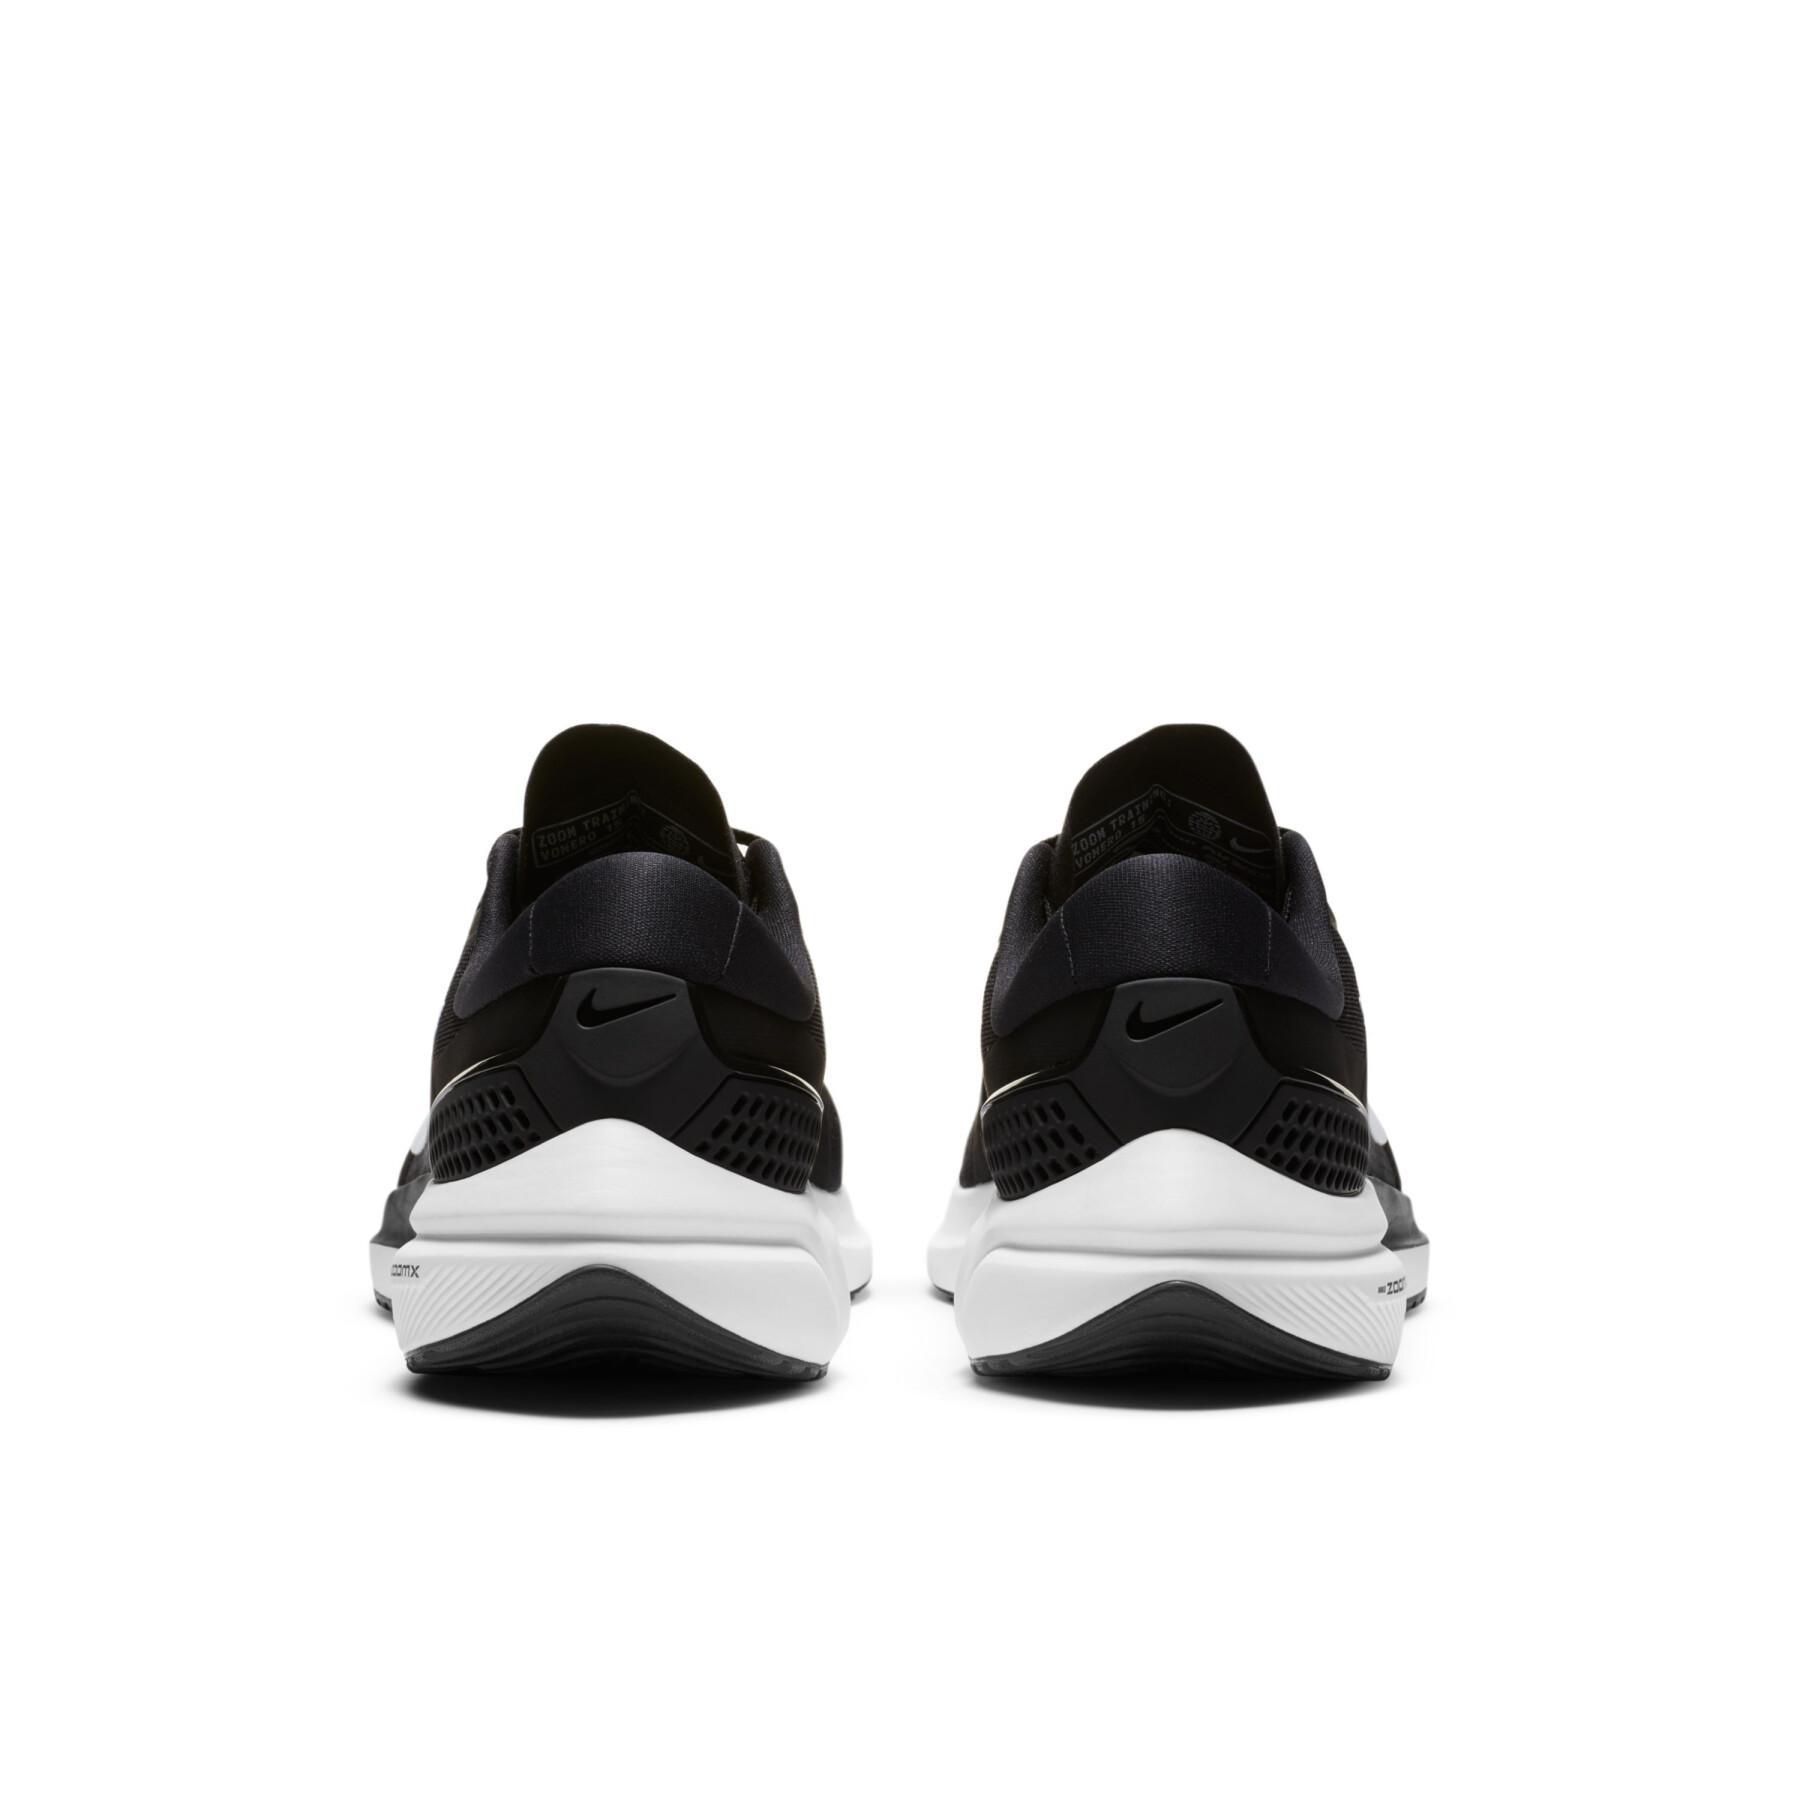 Chaussures de running Nike Air Zoom Vomero 15